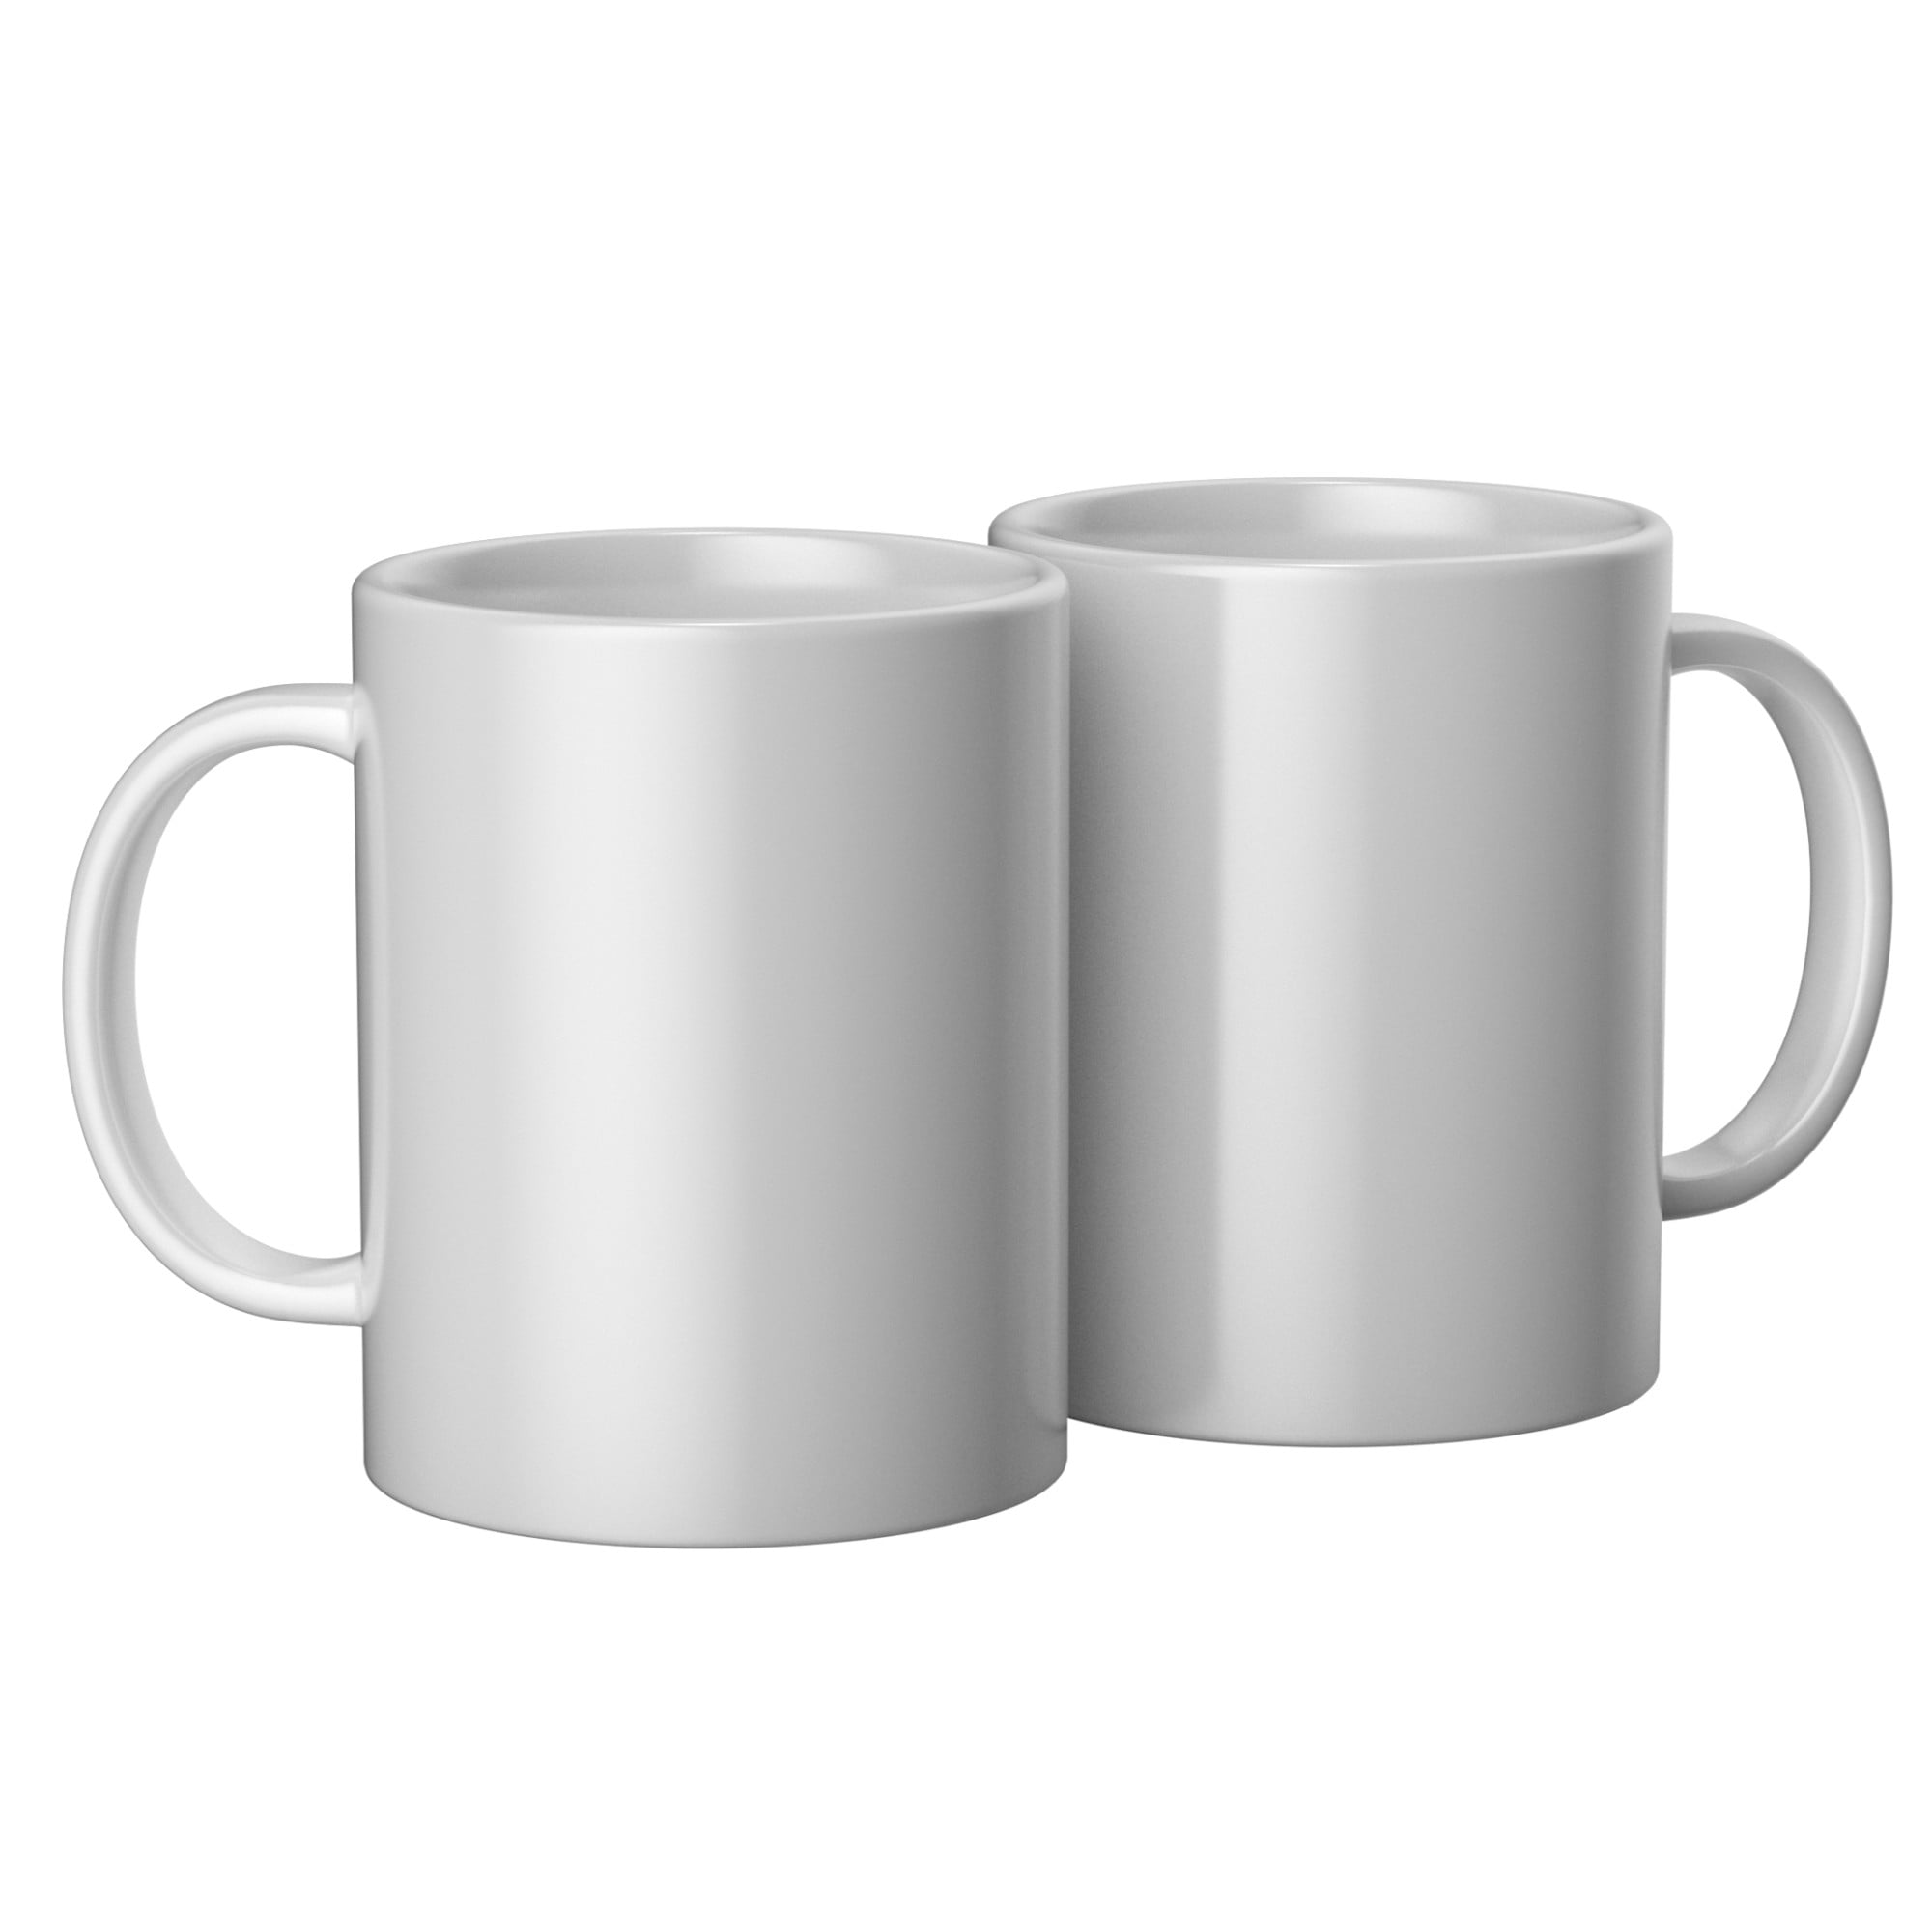 Cricut Ceramic Mug Blank 12 oz/340 ml (6 ct) White 2008942 - Best Buy